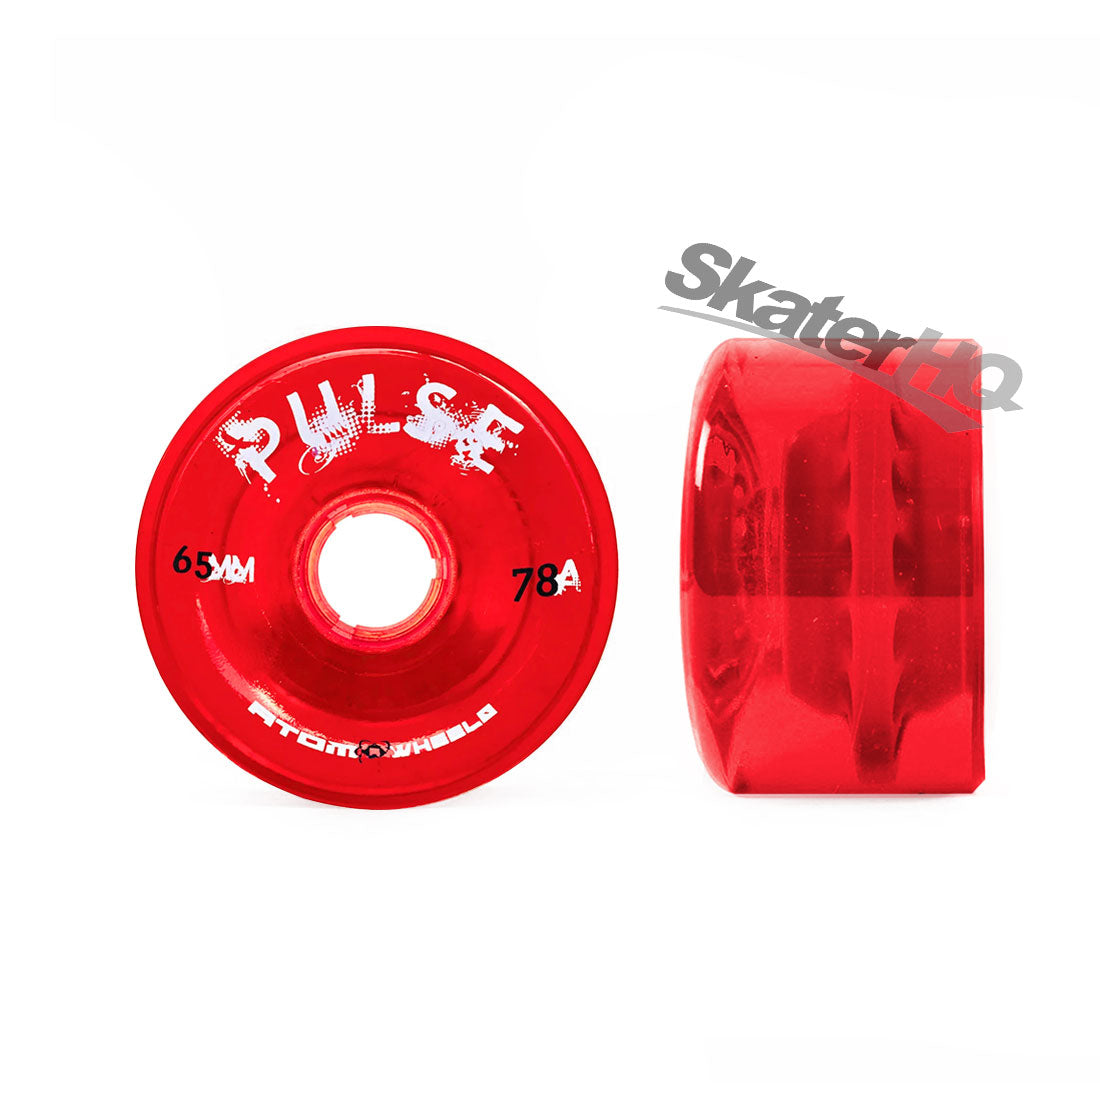 Atom Pulse 65x38mm 78a 4pk - Red Roller Skate Wheels